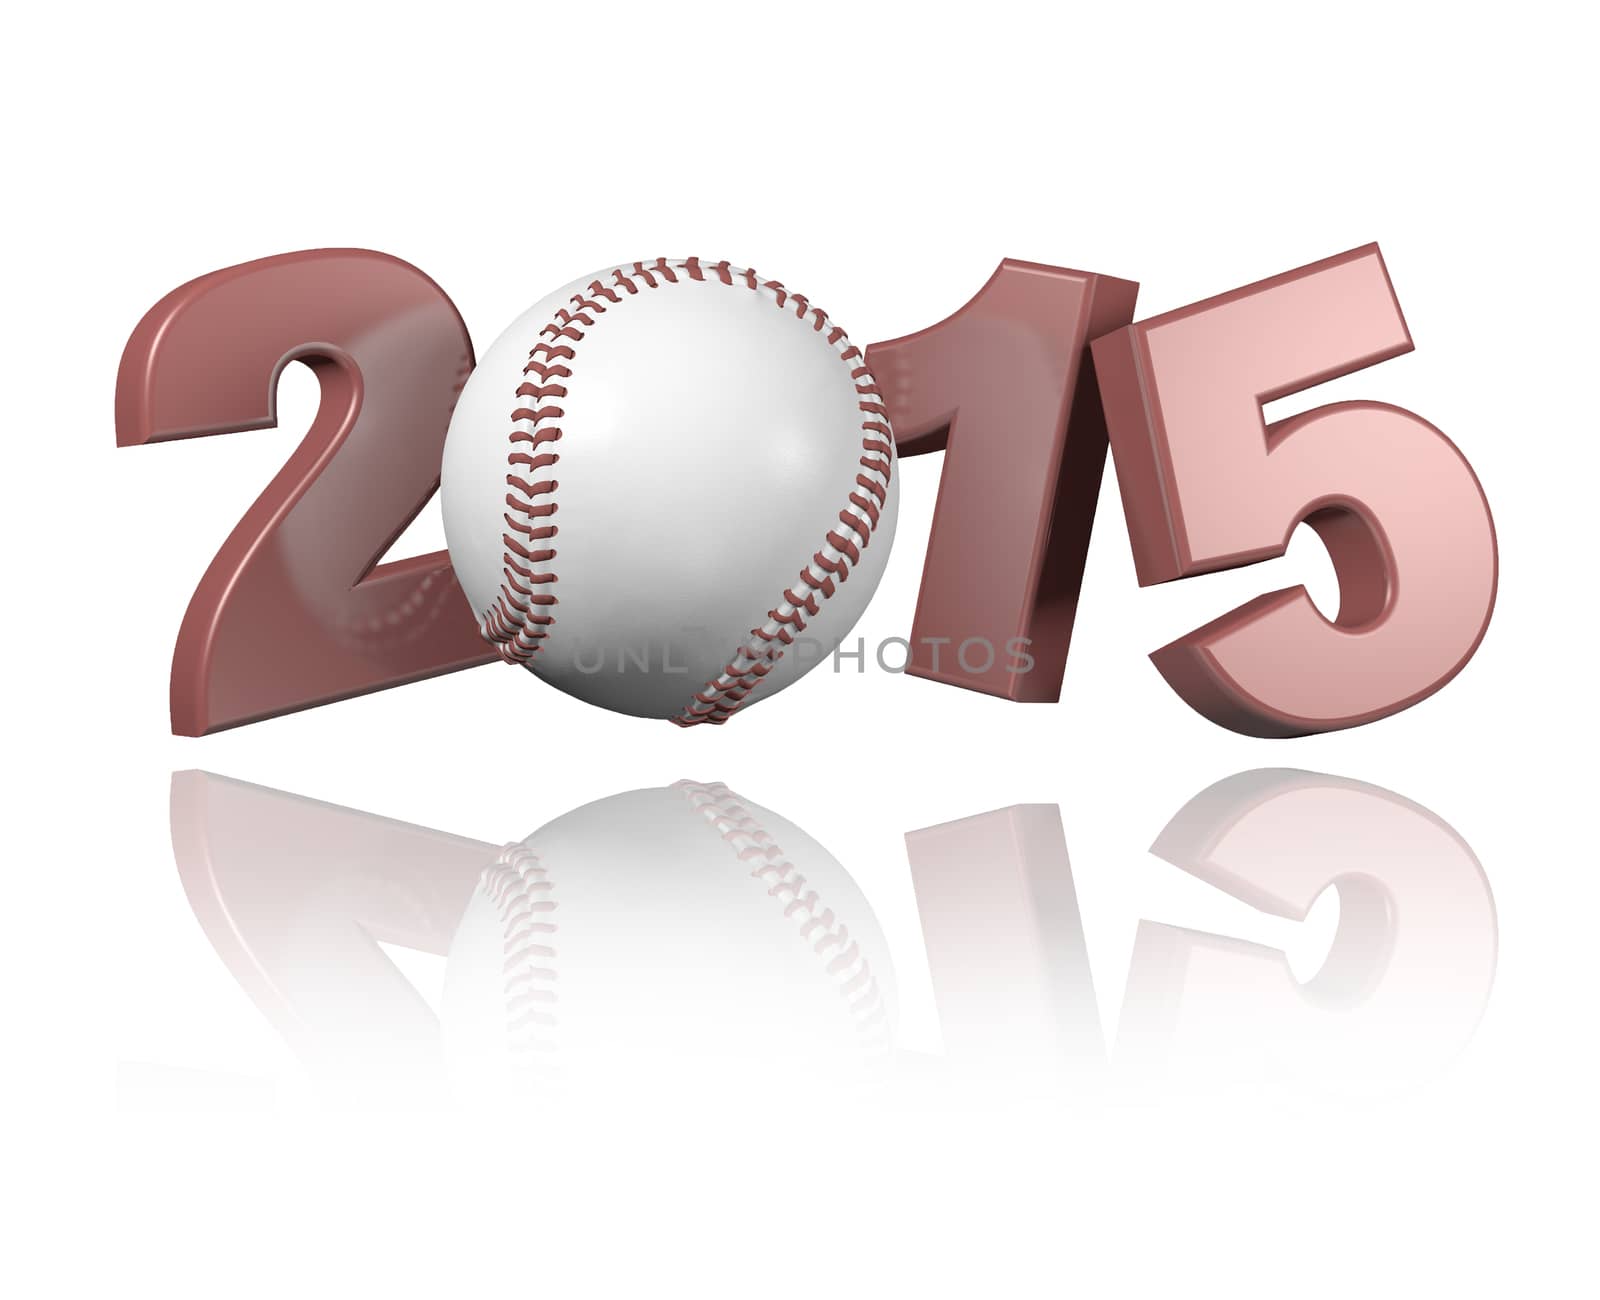 Baseball 2015 design by shkyo30